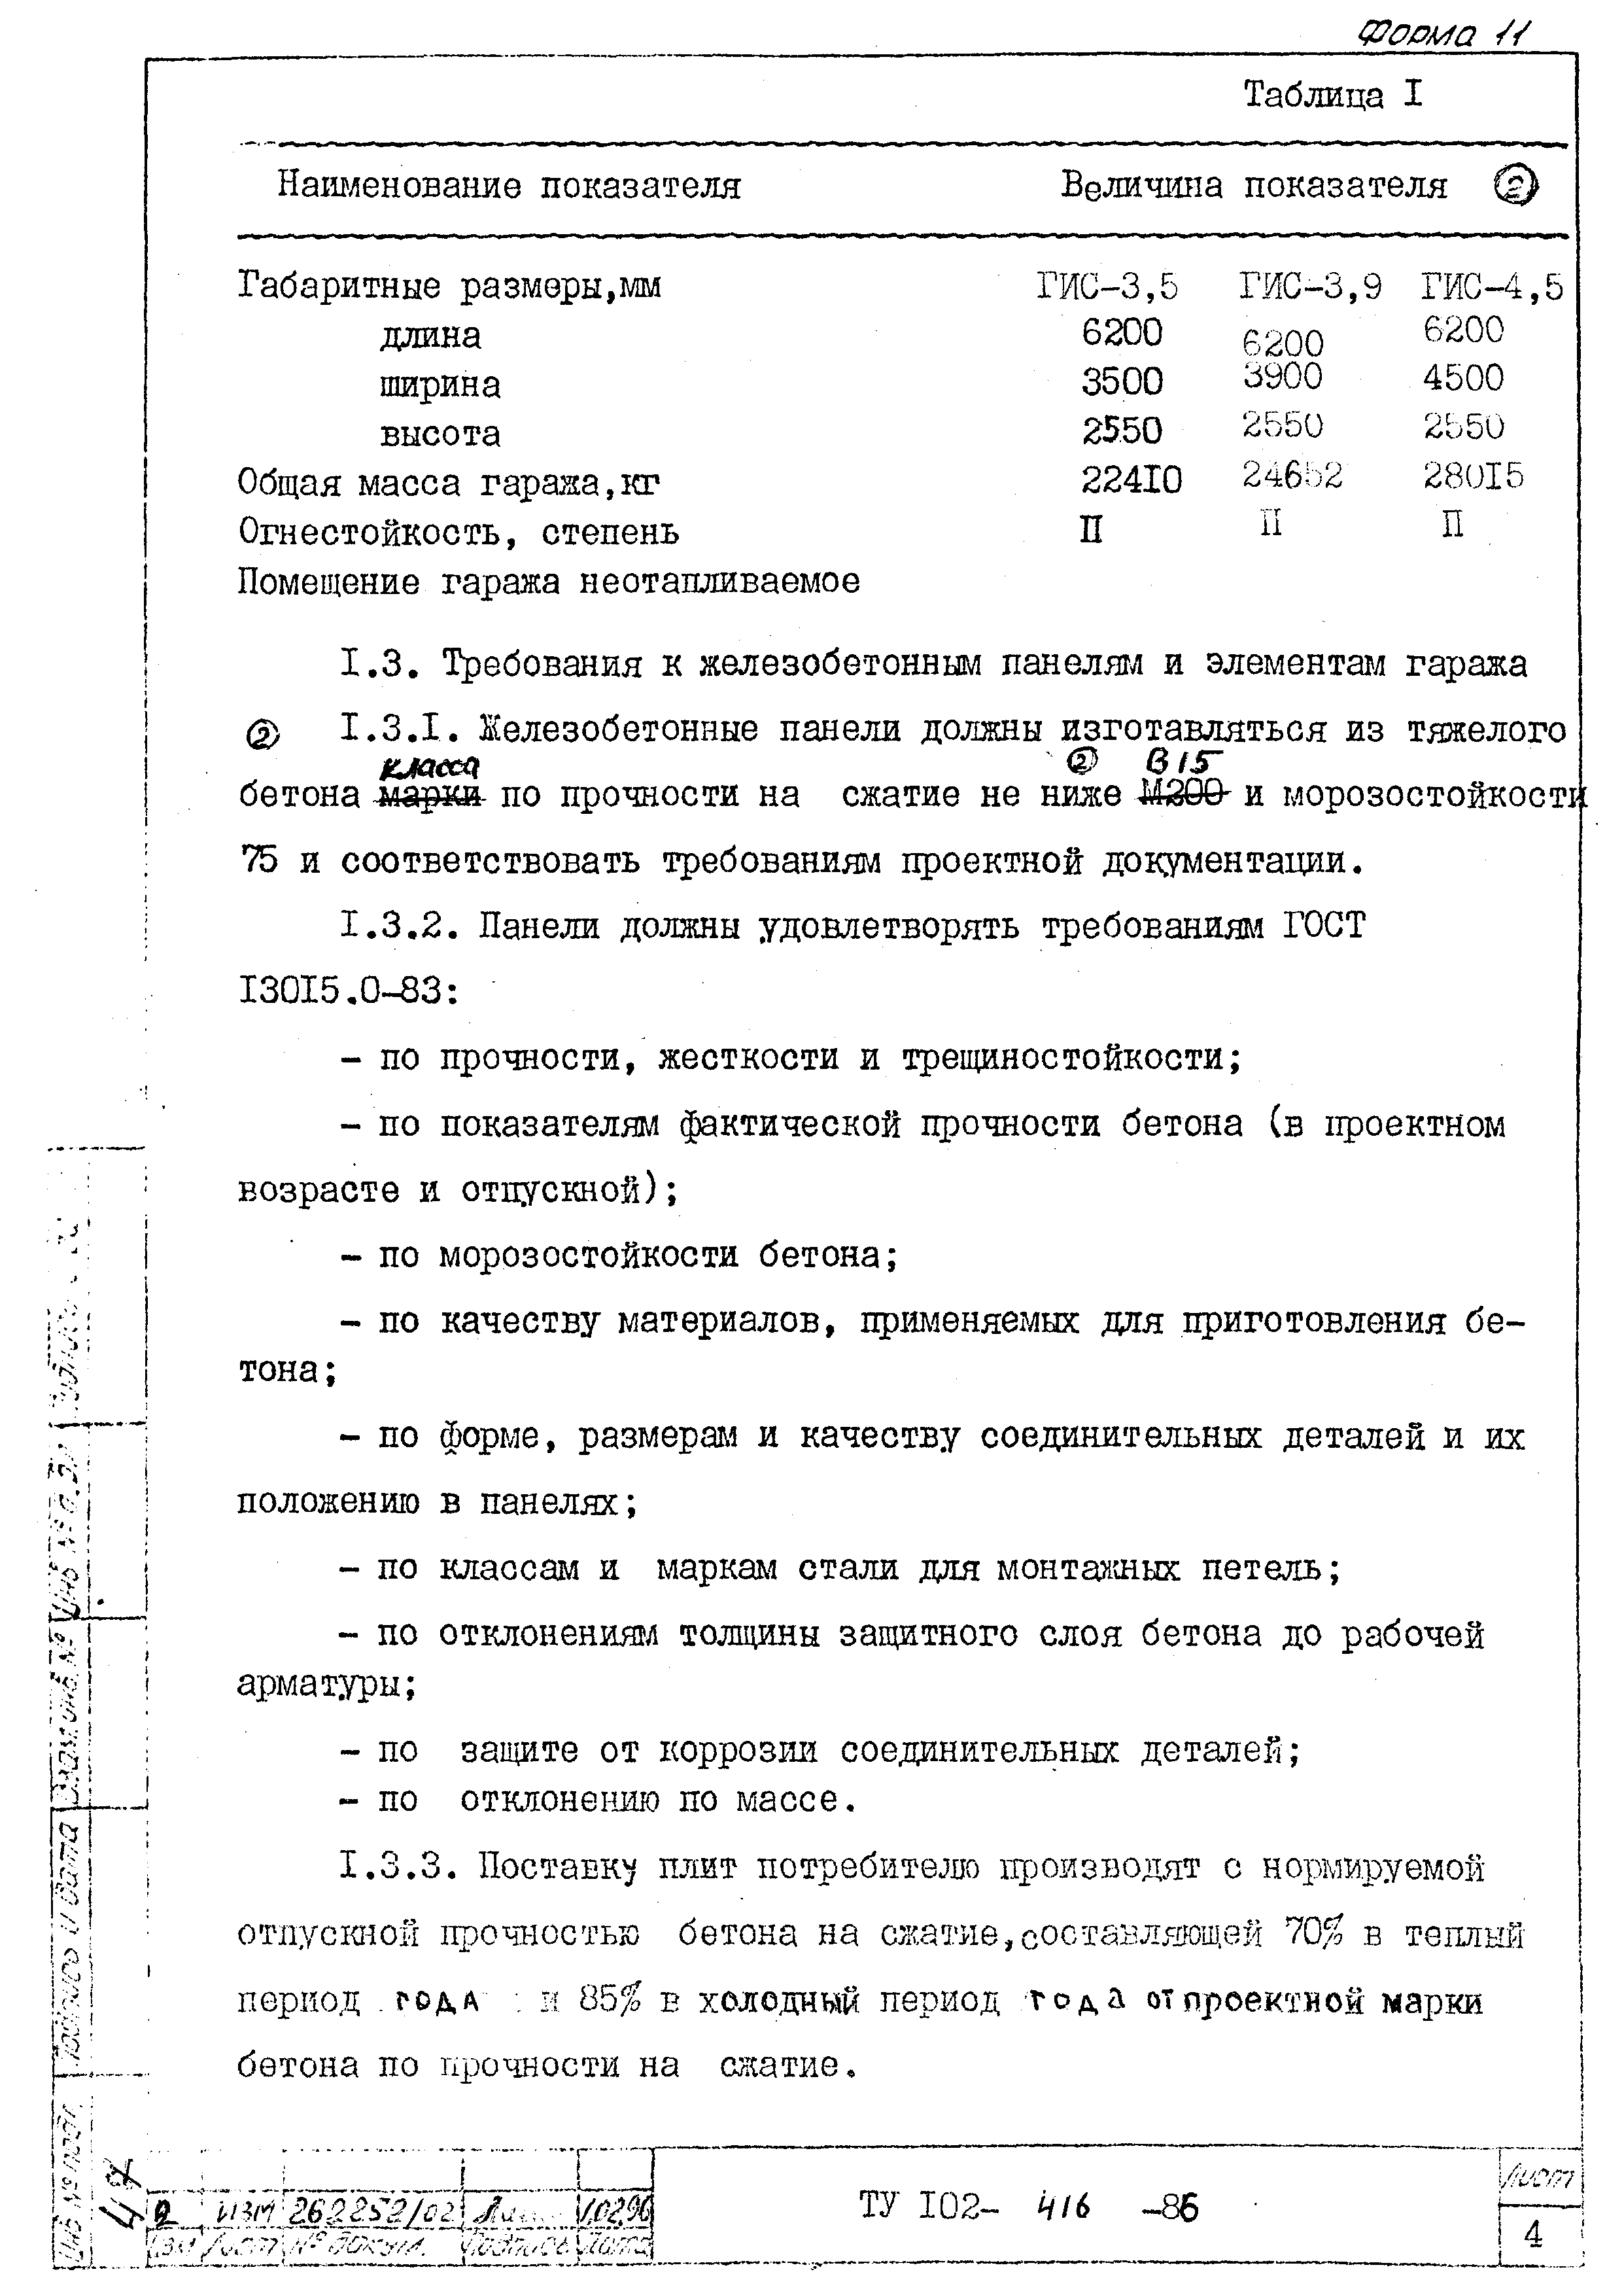 ТУ 102-416-86